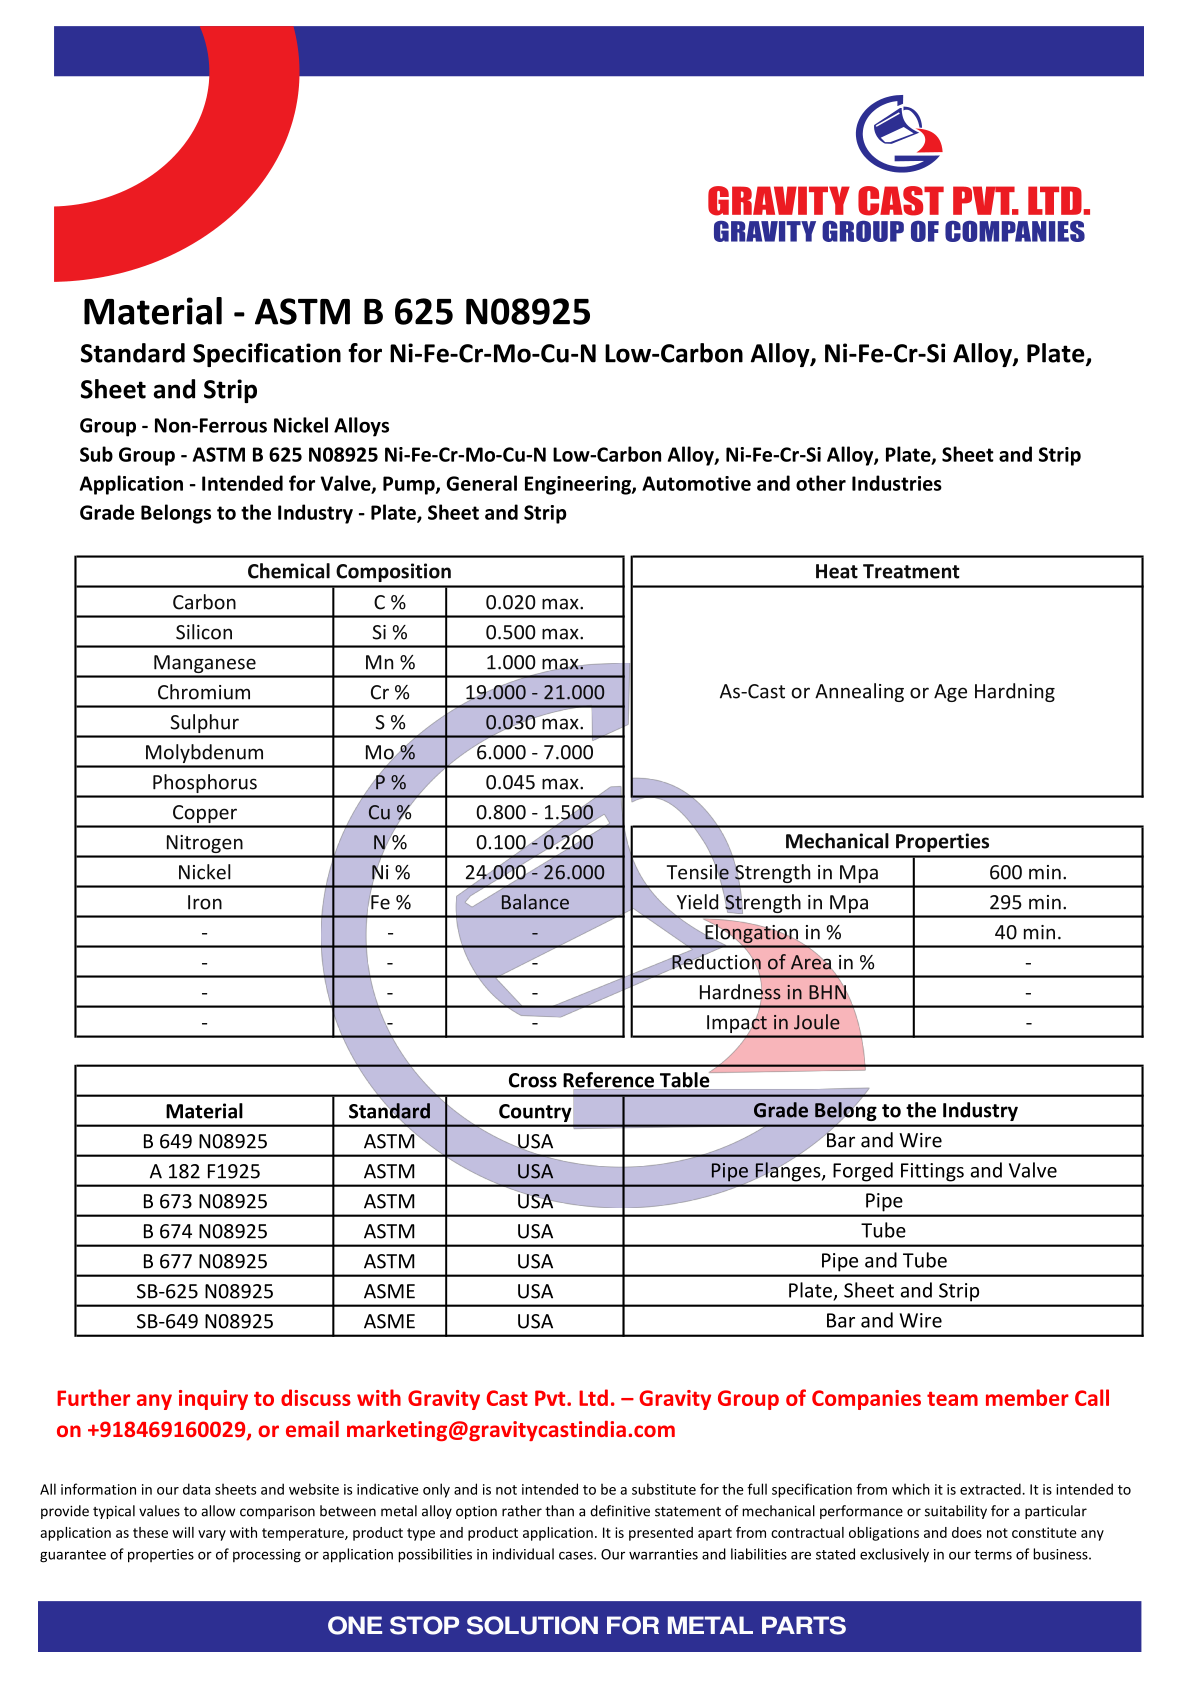 ASTM B 625 N08925.pdf